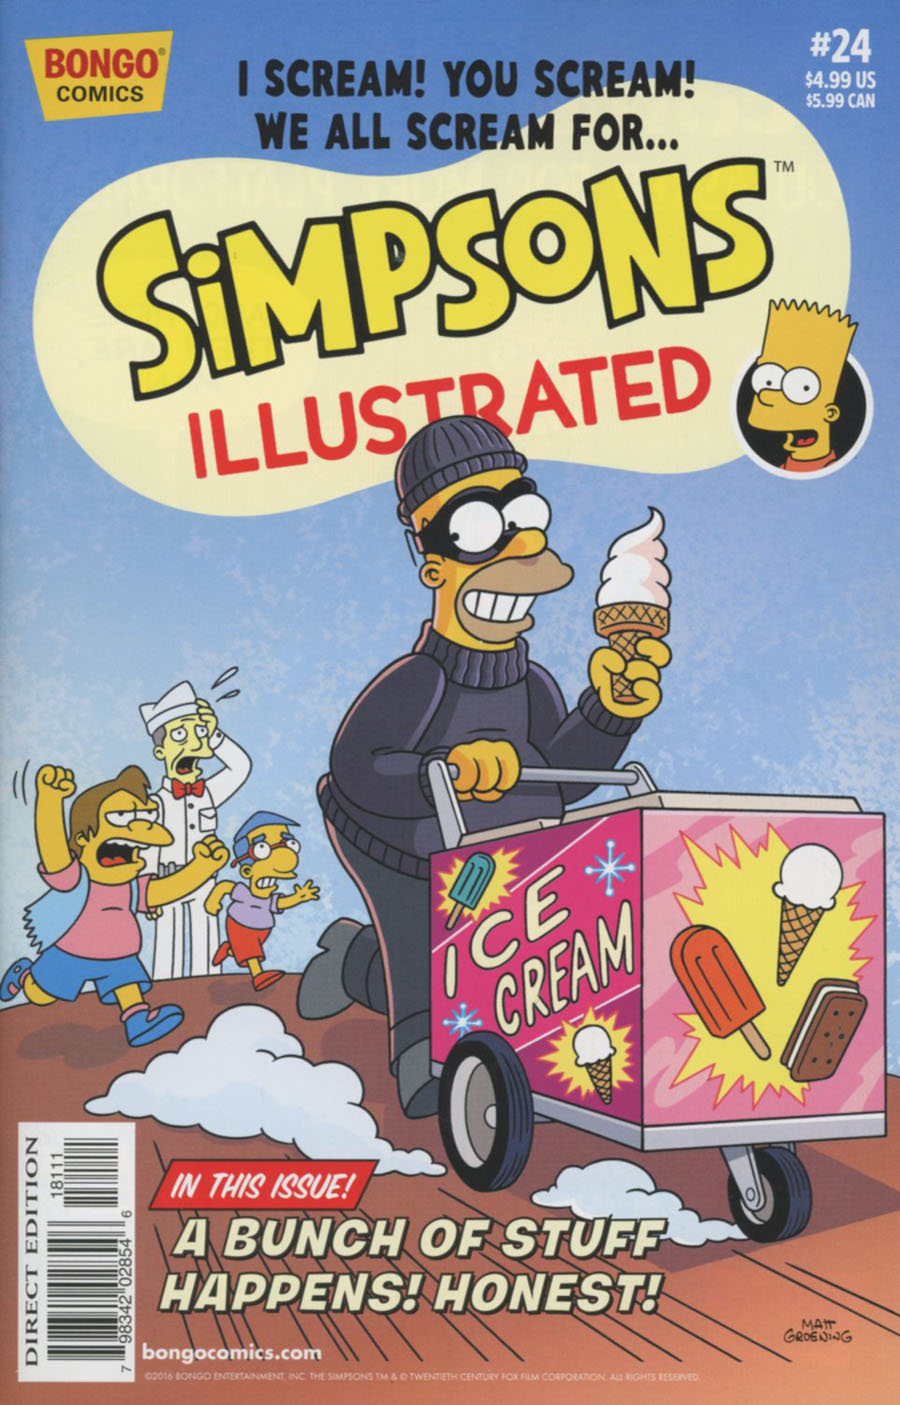 Simpsons Illustrated #24